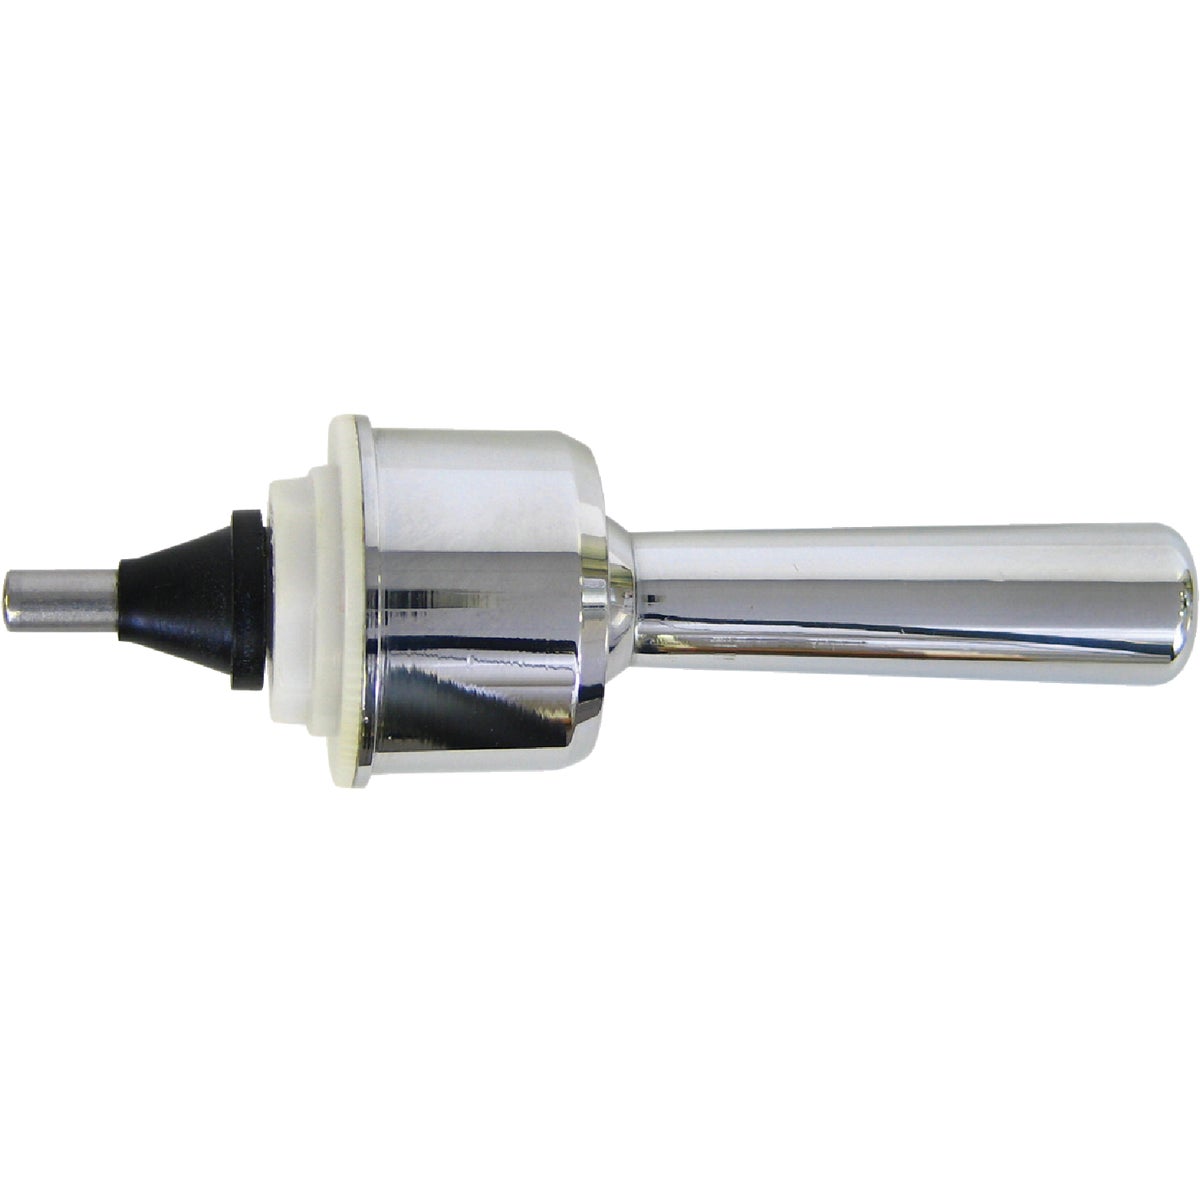 Item 420387, Sloan chrome plated flush valve lever handle.